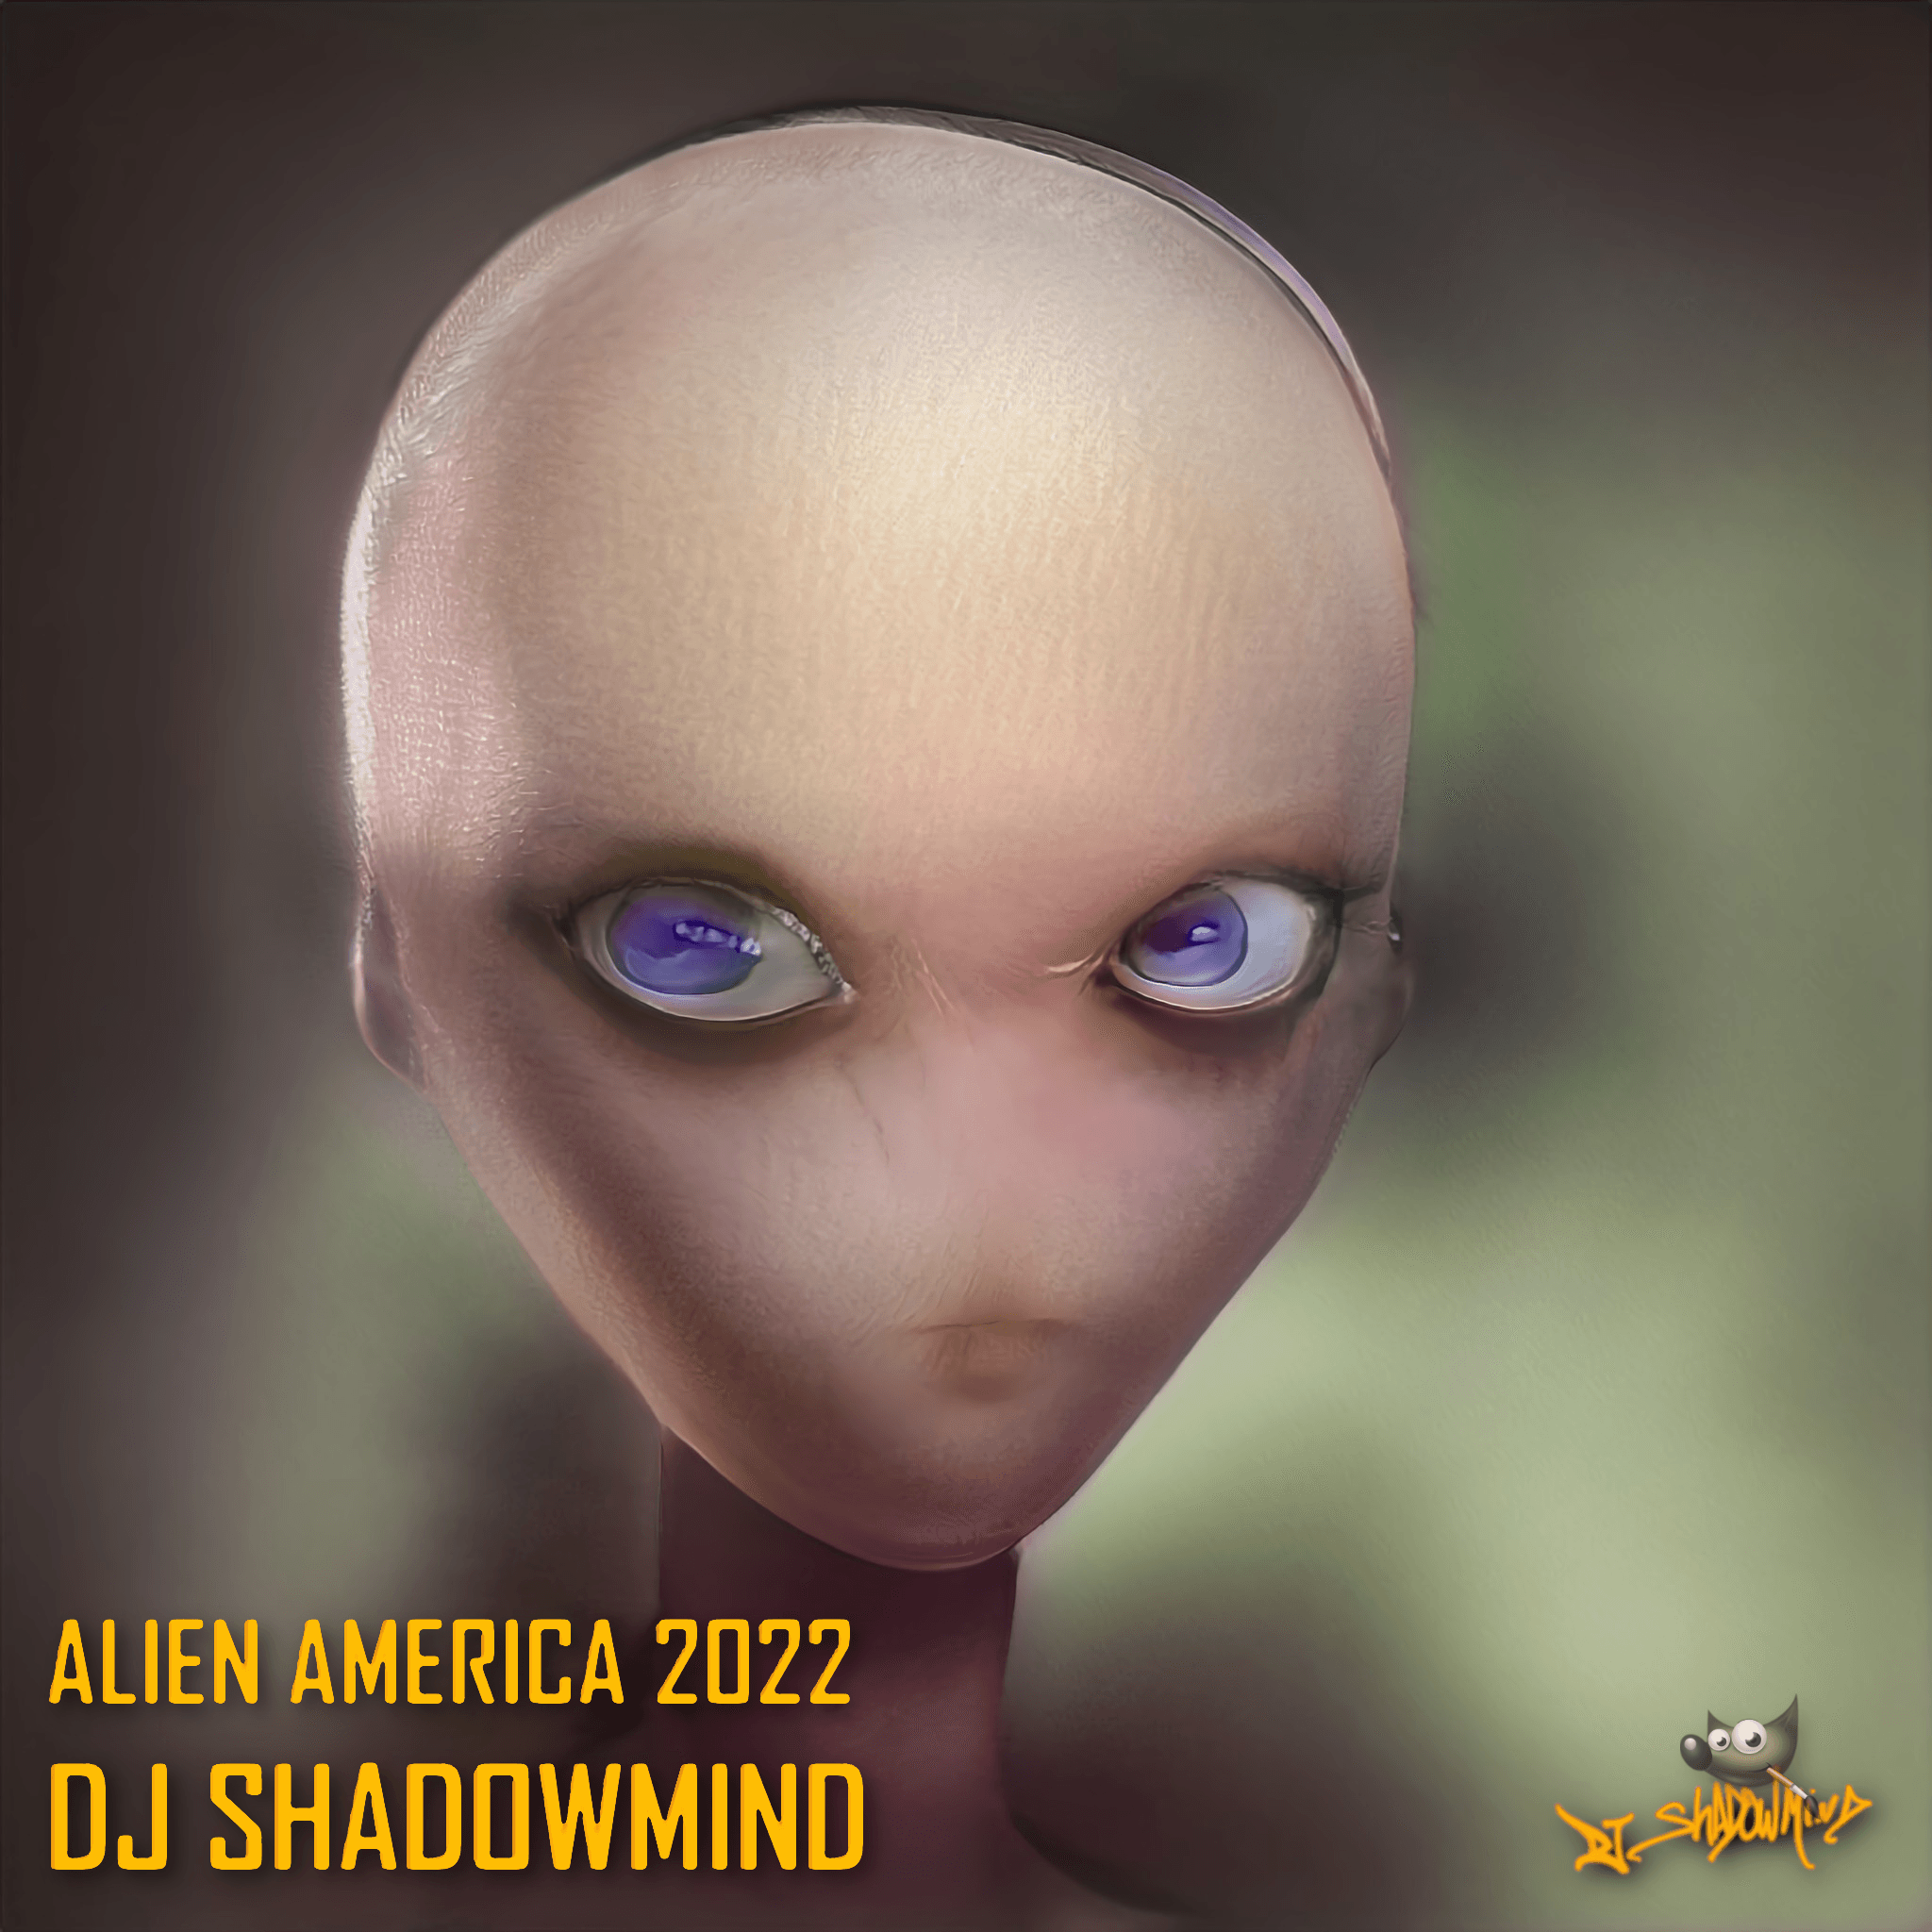 Alien America 2022 - Agent 003